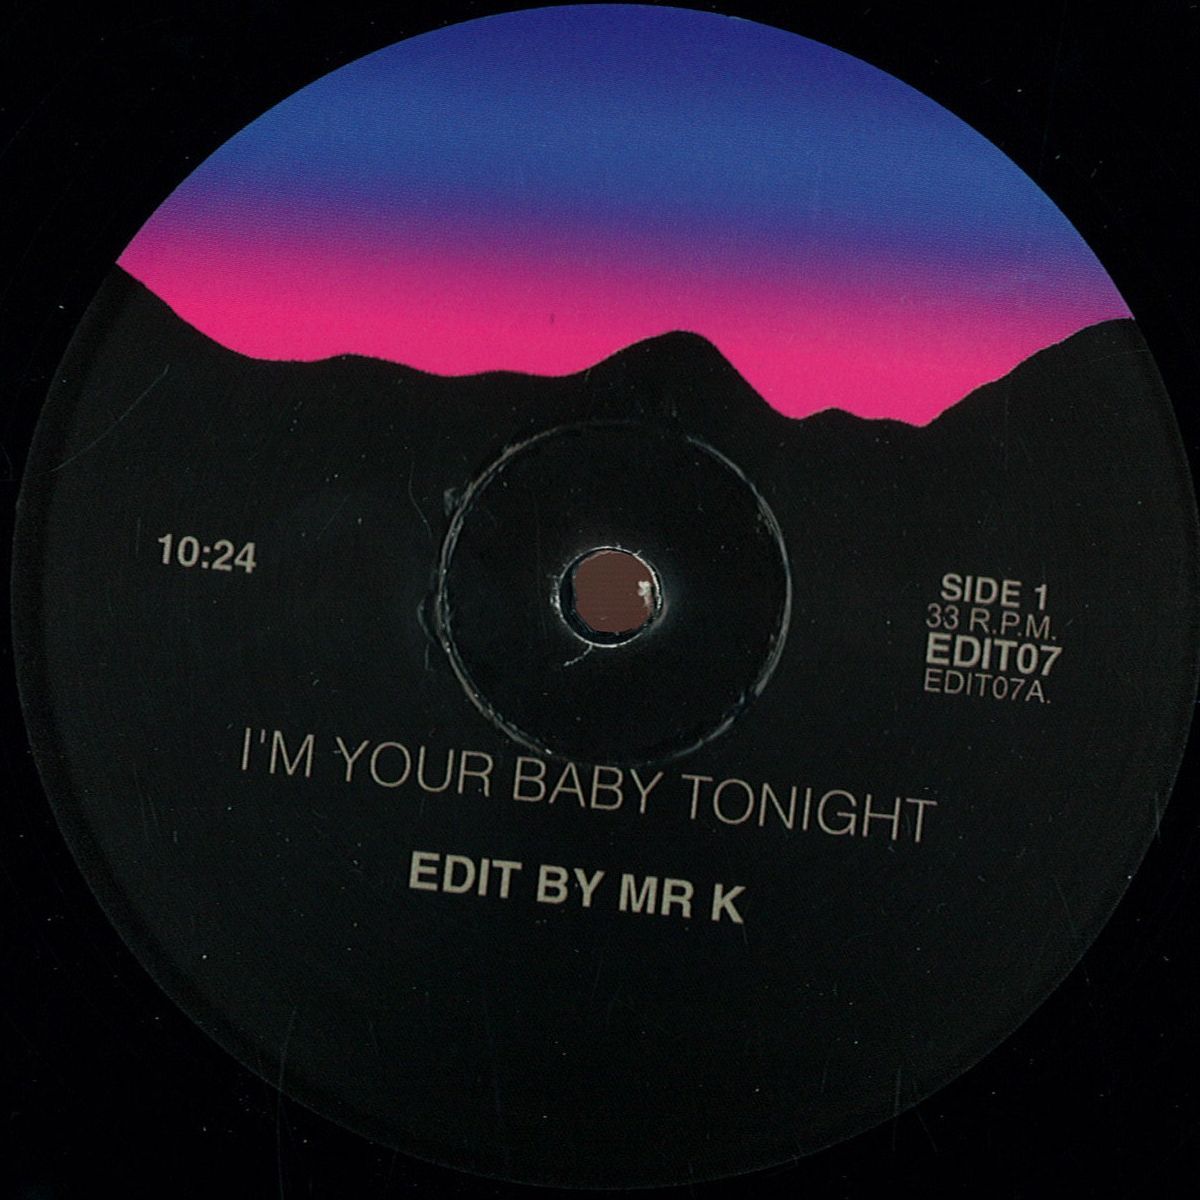 Whitney Houston & Chocolate - I'm Your Baby Tonight - It's That East Street Beat